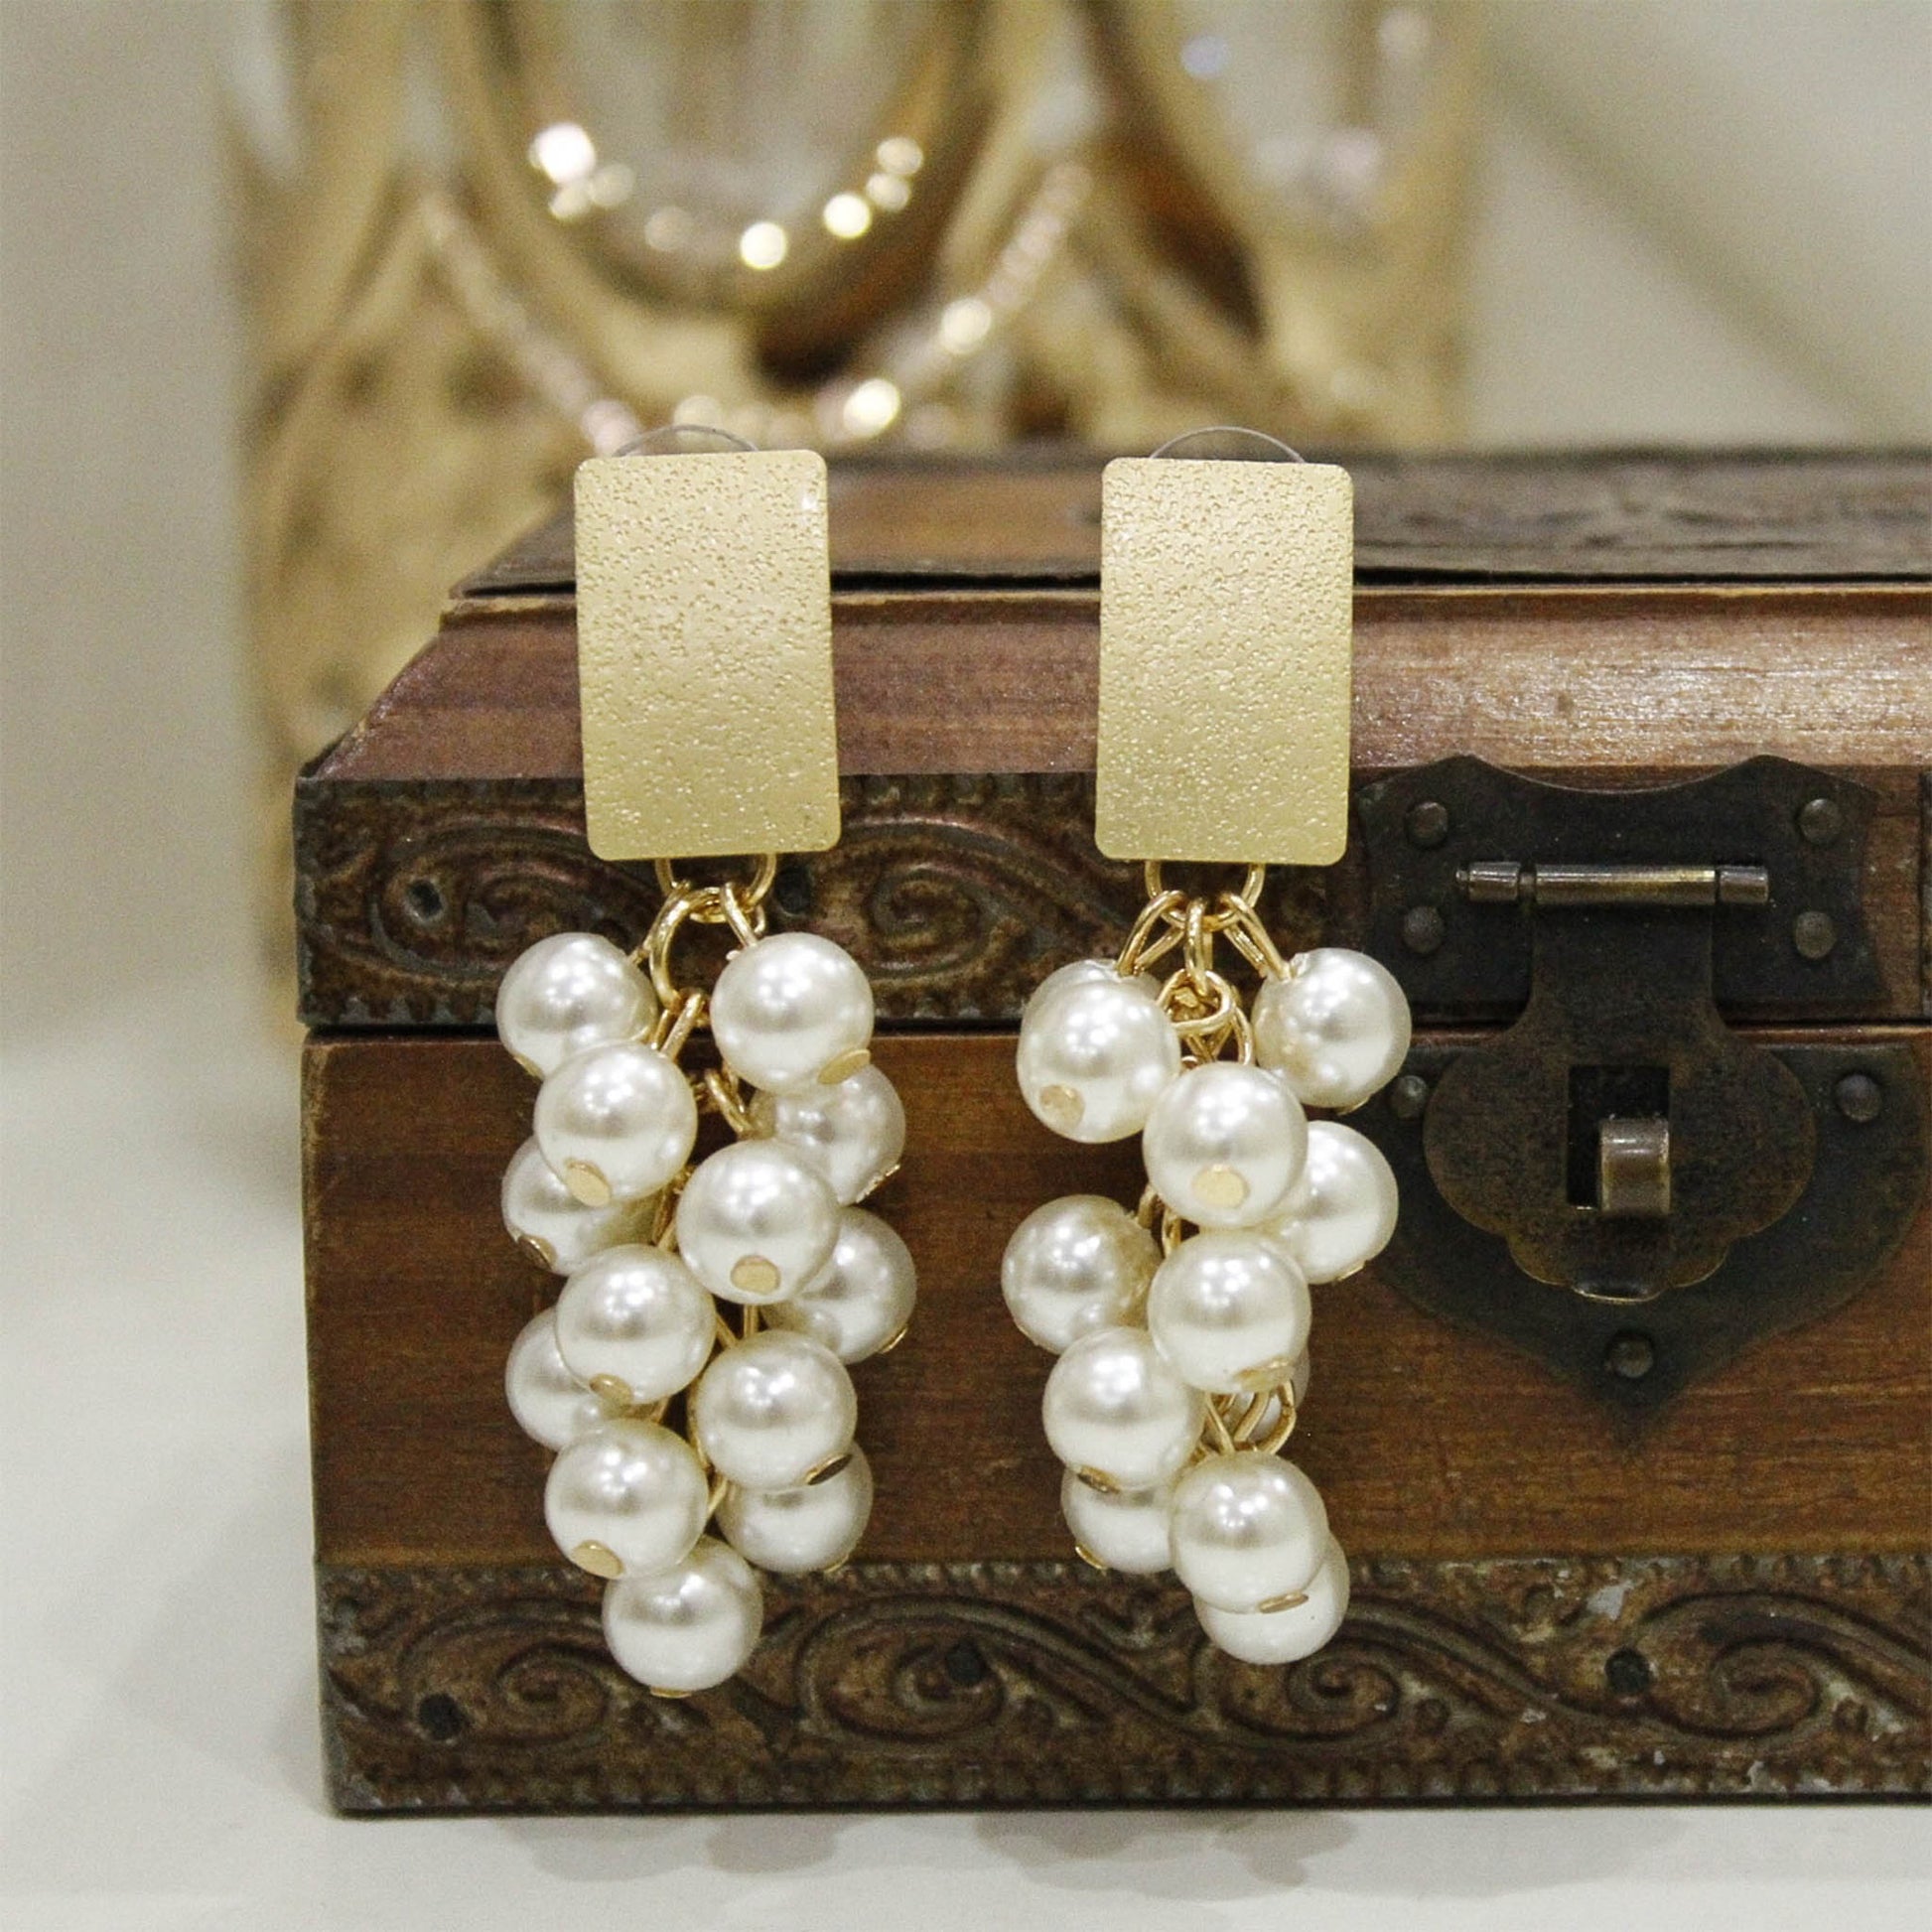 Golden Grapes Earrings - Zee Collection pk